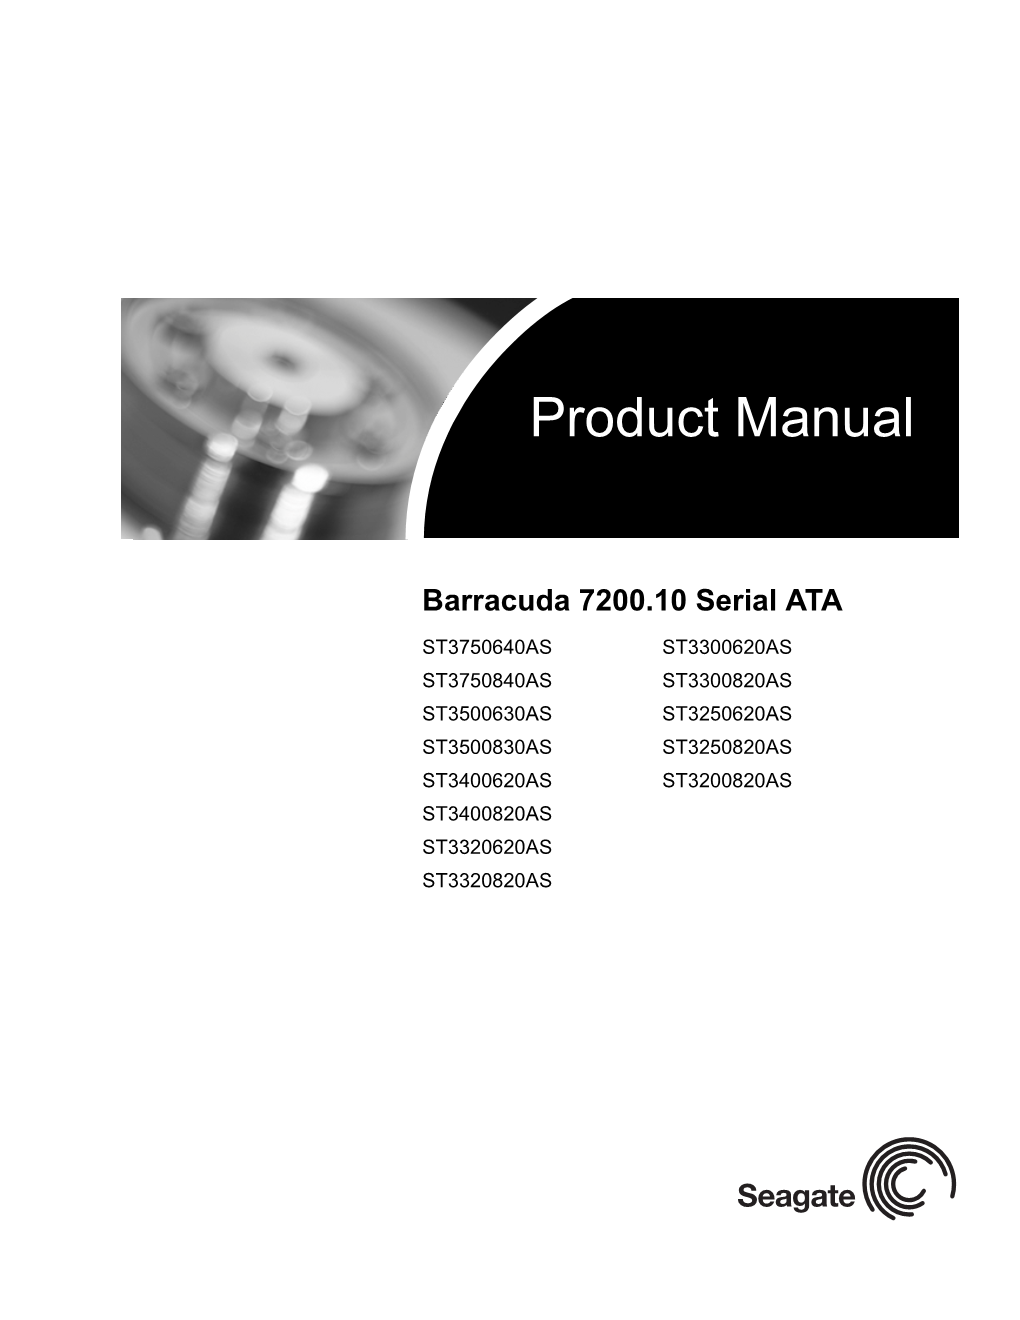 Barracuda 7200.10 Serial ATA Product Manual, Rev